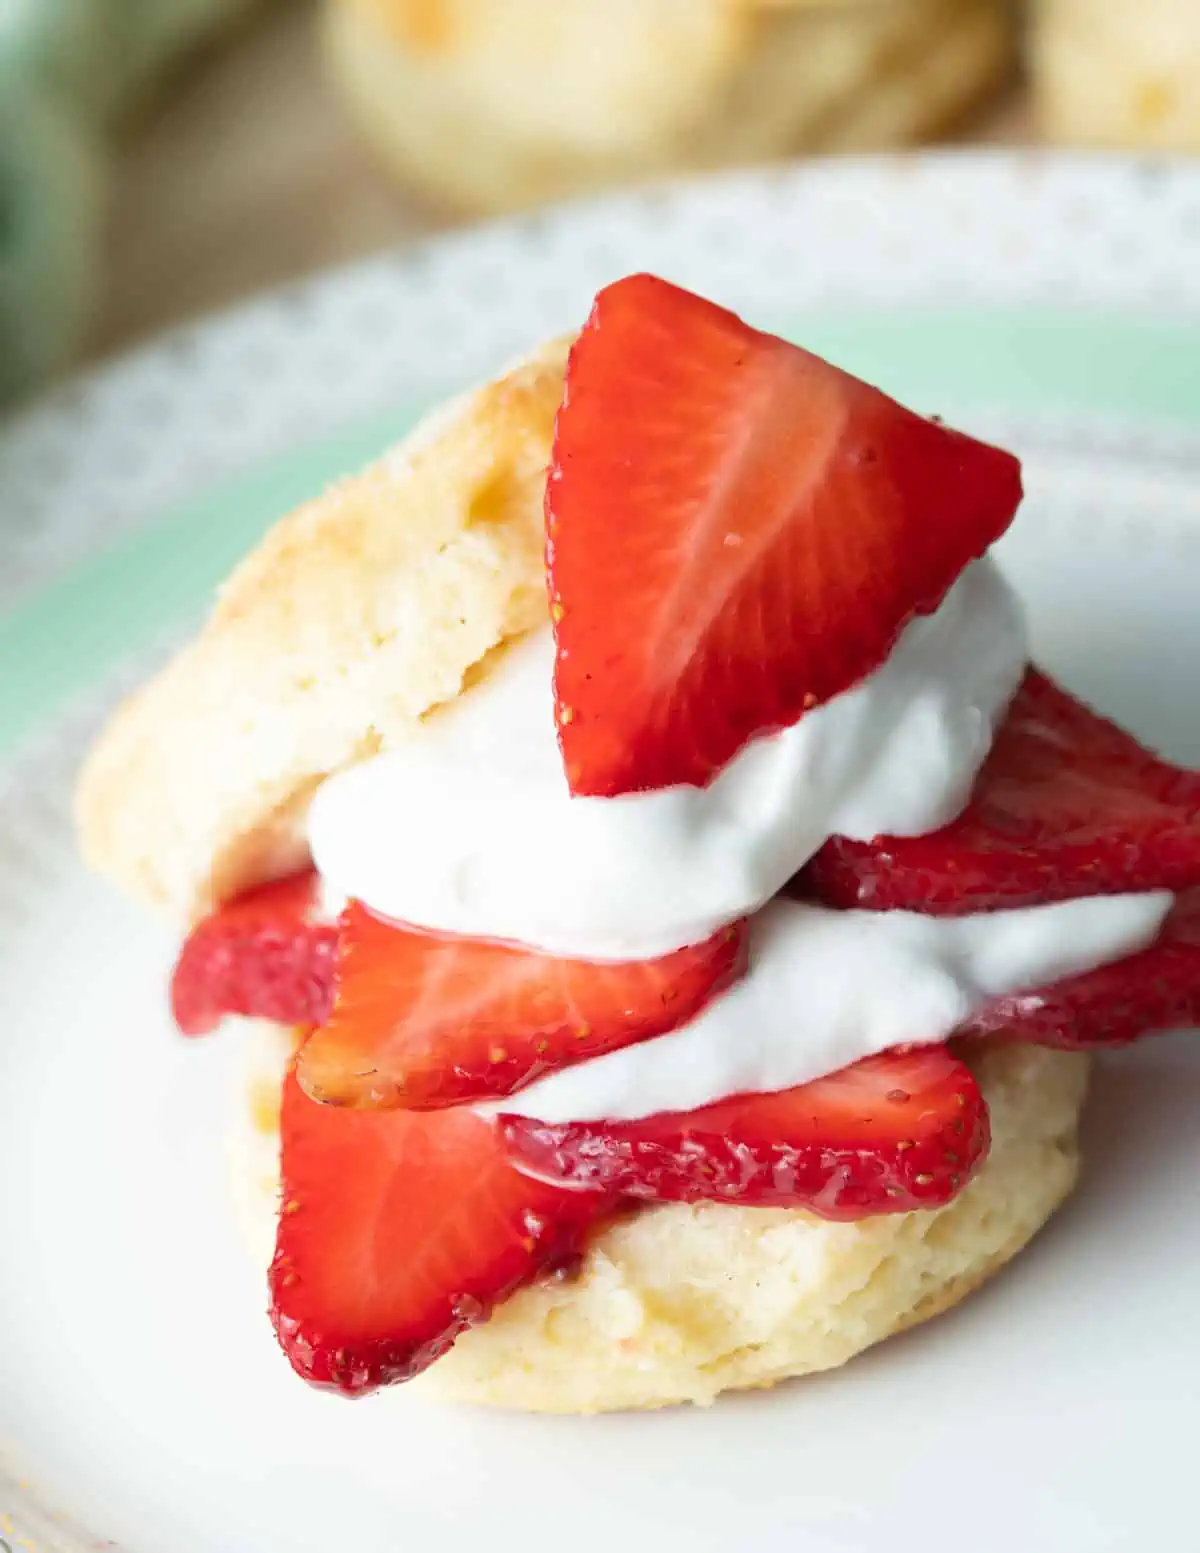 Vegan strawberry shortcake on plate.
